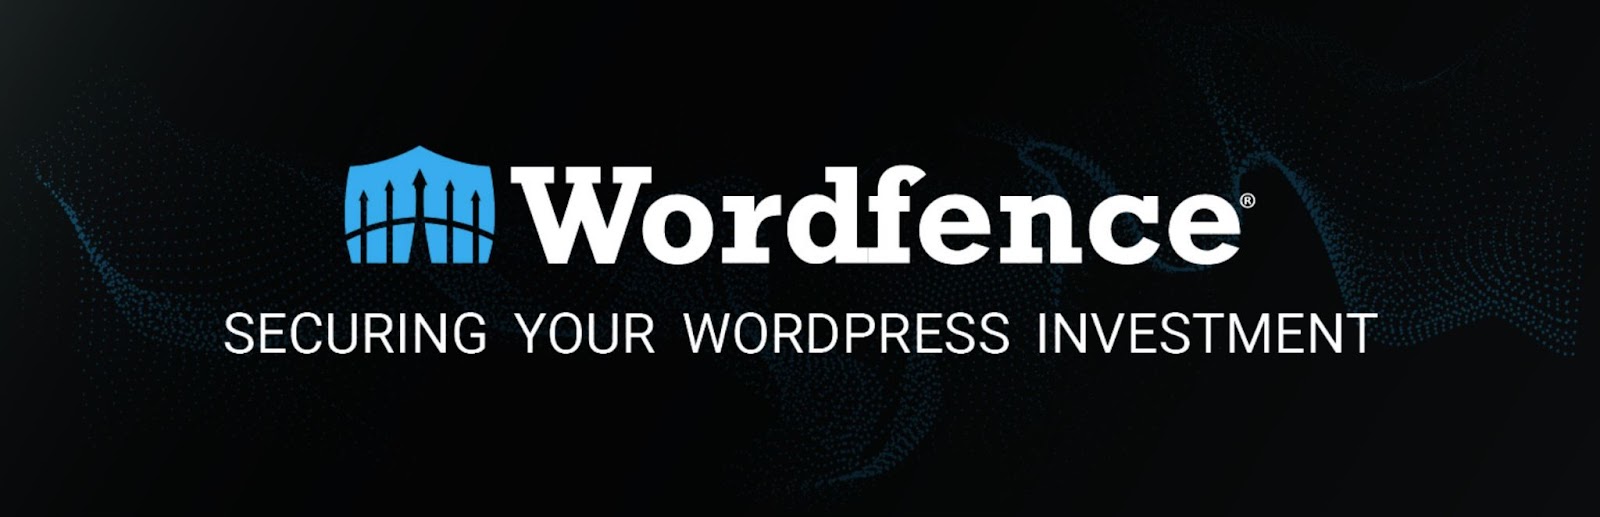 WordPress plugin to block countries, the Wordfence plugin listing image at WordPress.org